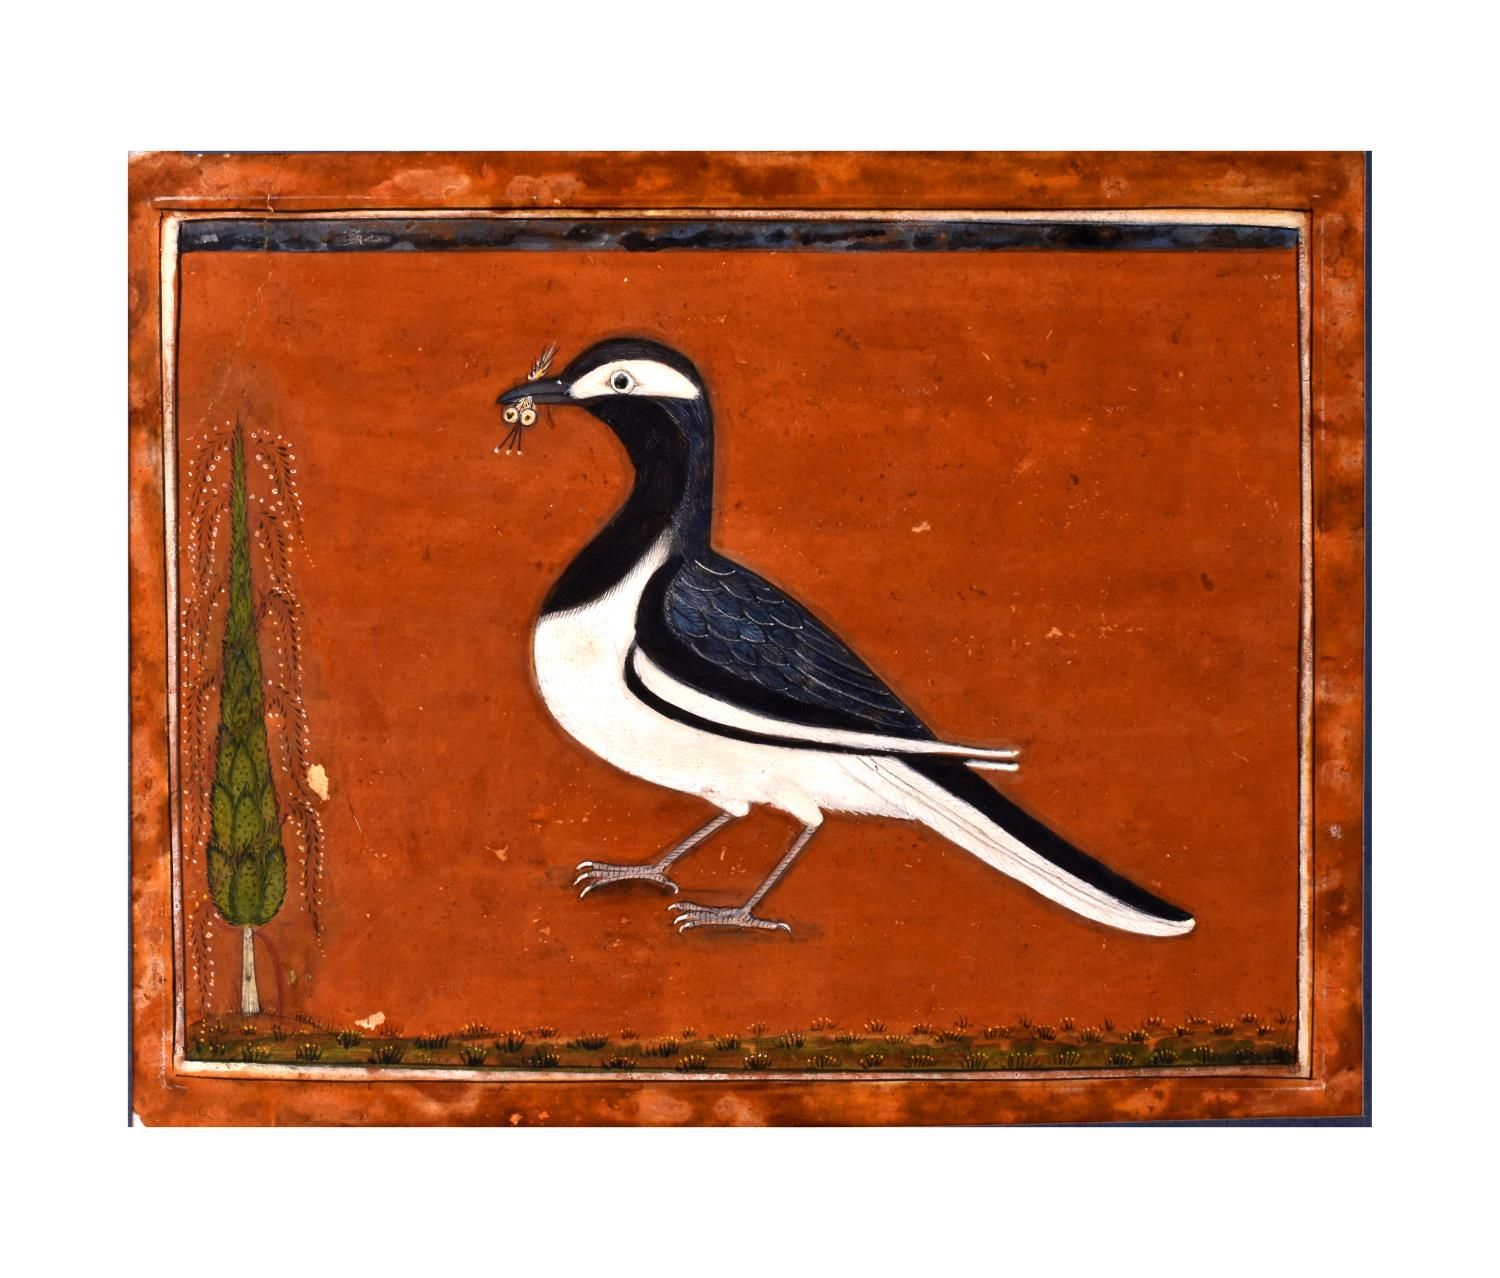 A PAHARI/BASHOLI BIRD WITH AN INSECT PREY IN HIS BEAK, 18TH CENTURY, INDIA OISEA&hellip;